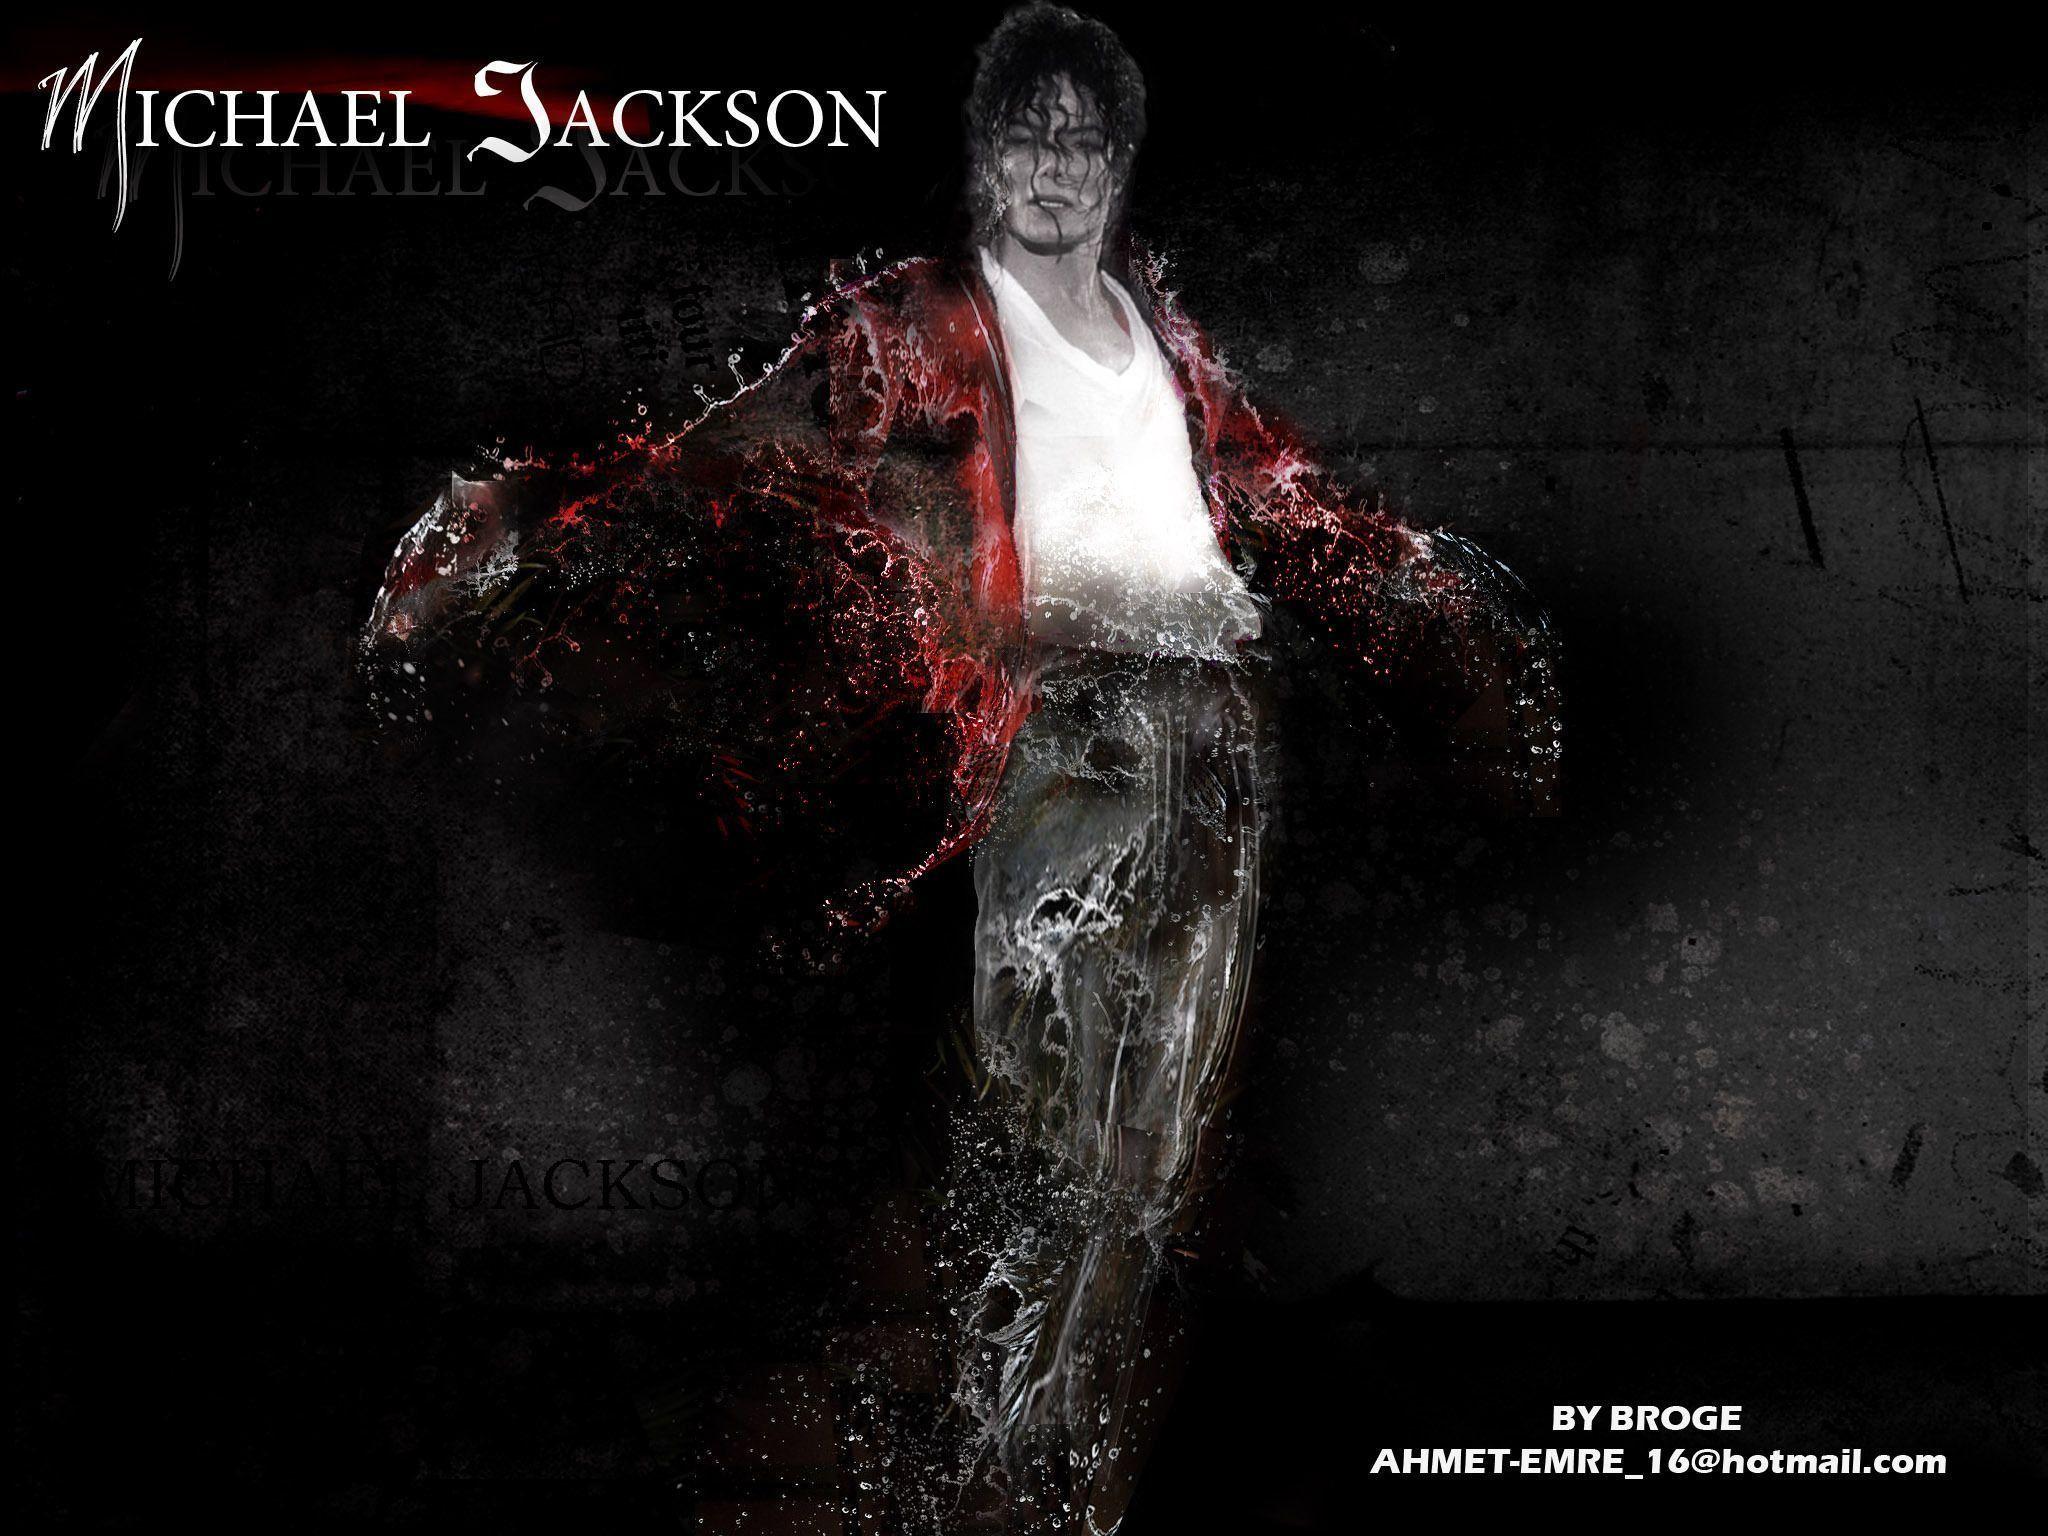 Michael Jackson Image Wallpaper